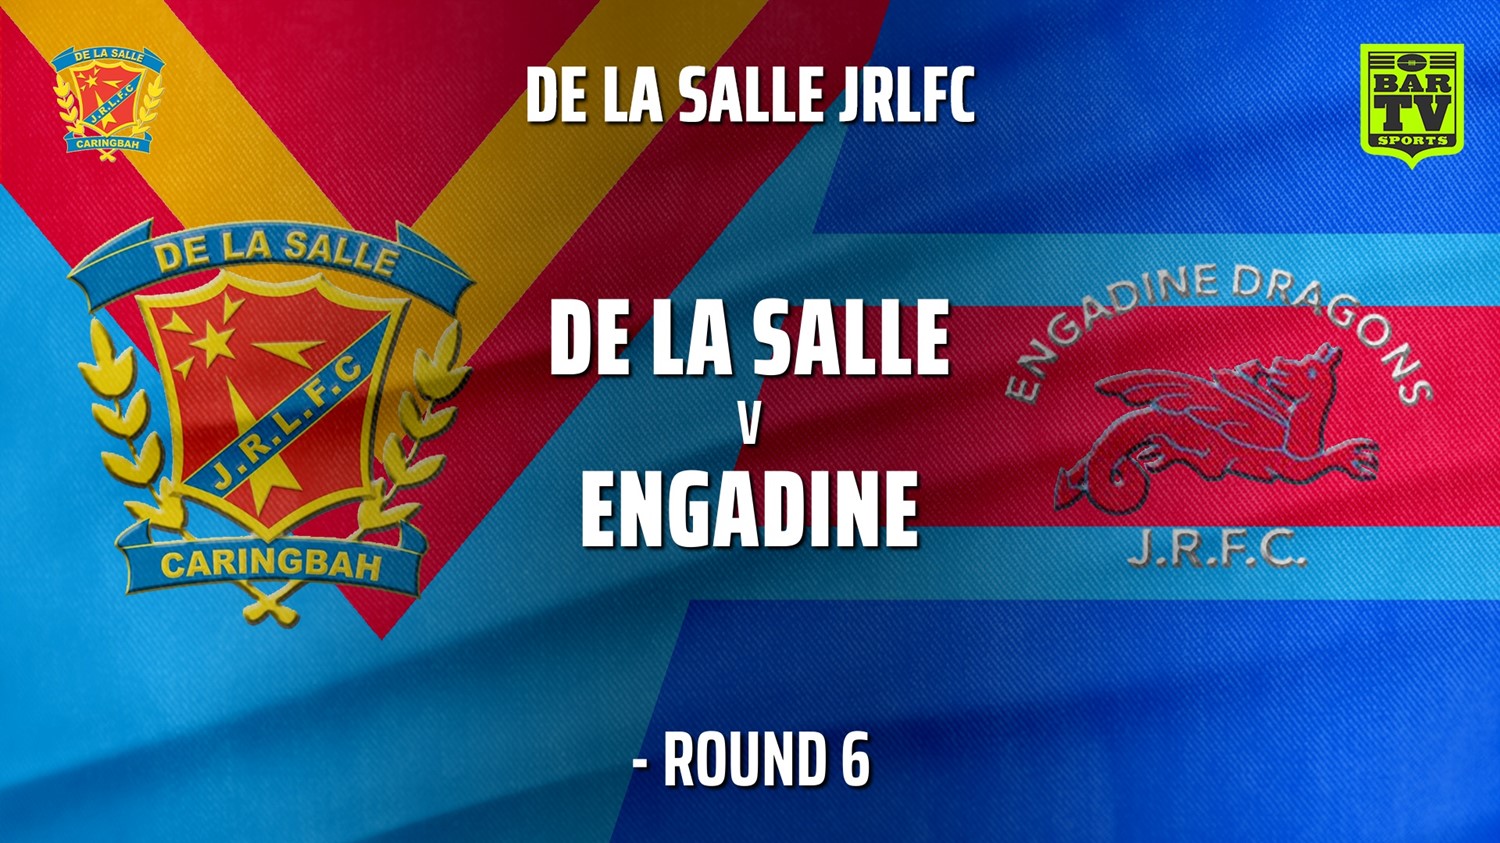 210605-De La Salle - Blues Tag Over 35 Round 6 - De La Salle v Engadine Dragons (1) Slate Image